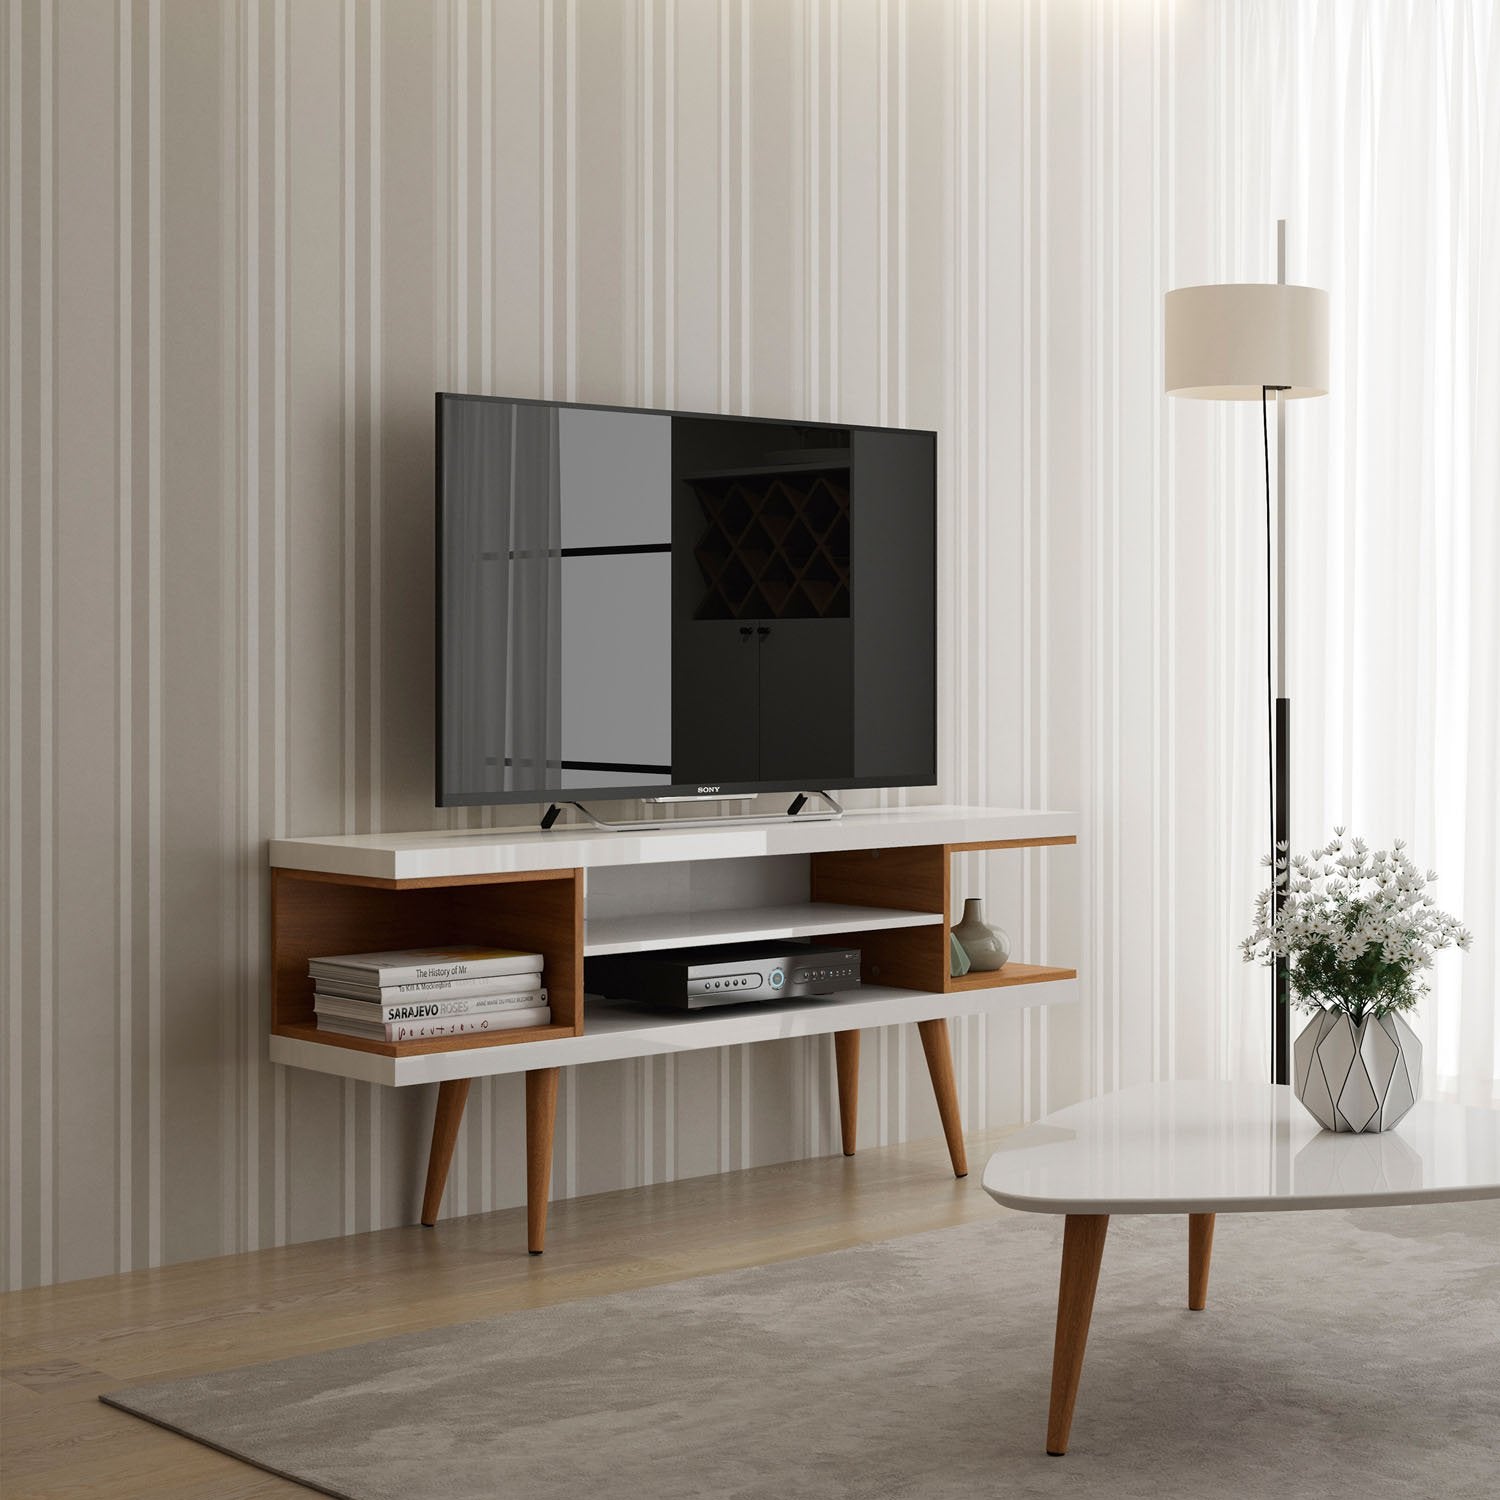 Mueble de TV Axel 140 cm (50")